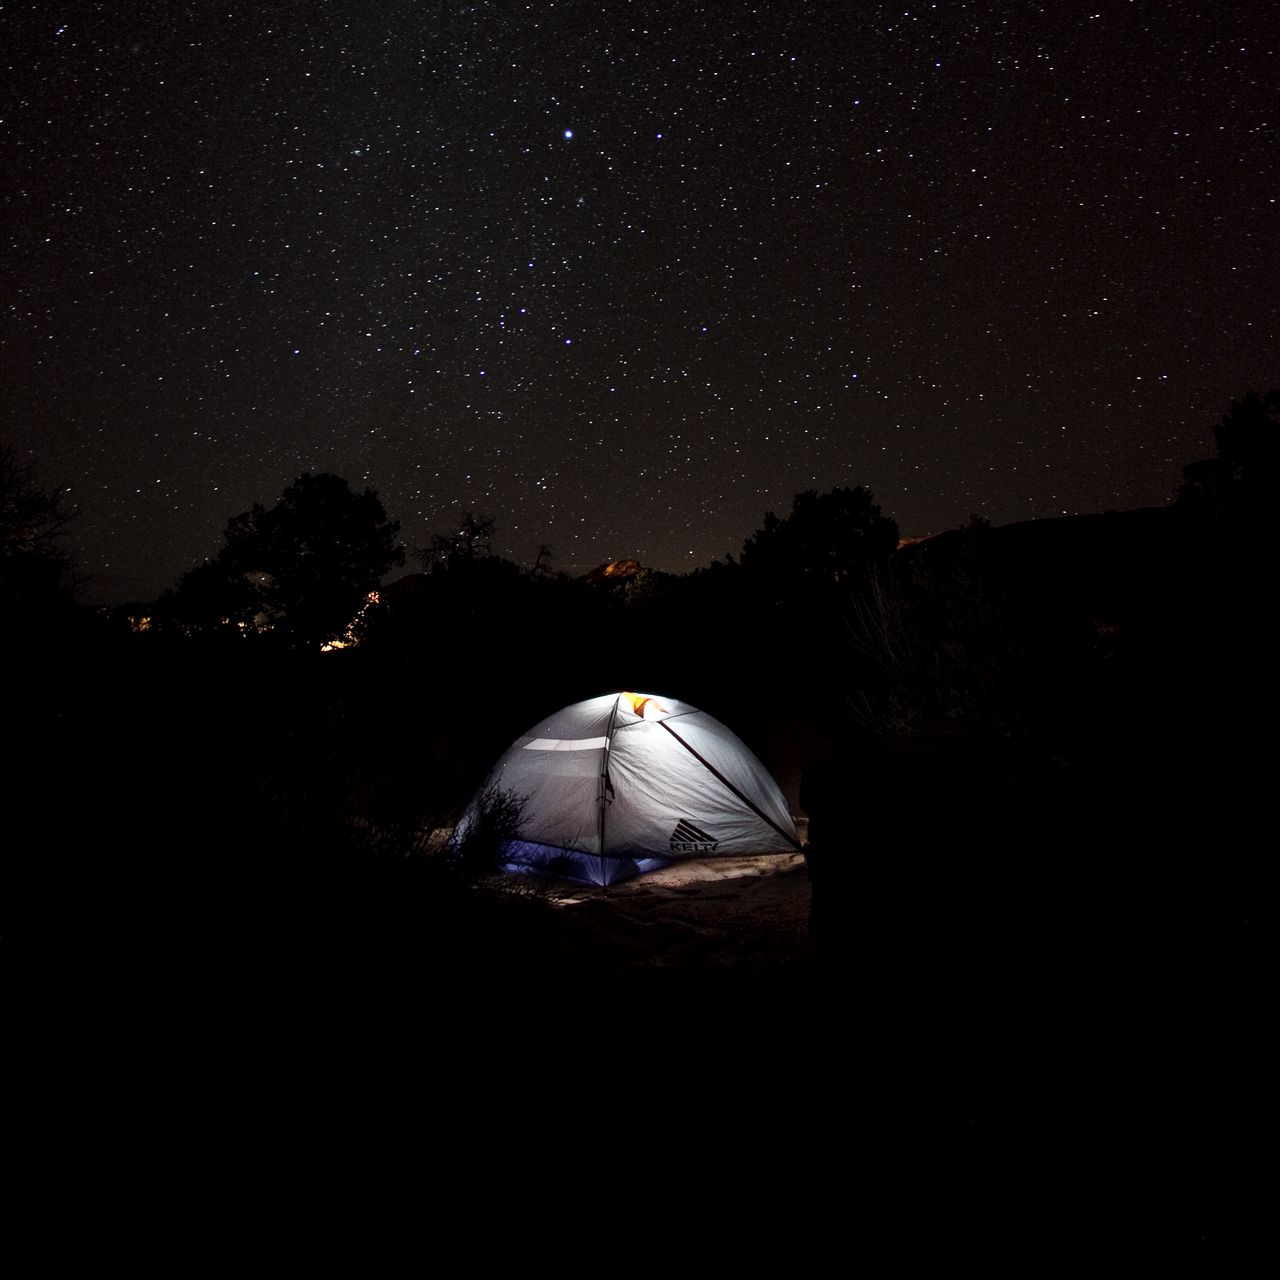 Night camp. Палатка ночью. Звездное небо и палатка. Обои палатка. Палатка в темноте.